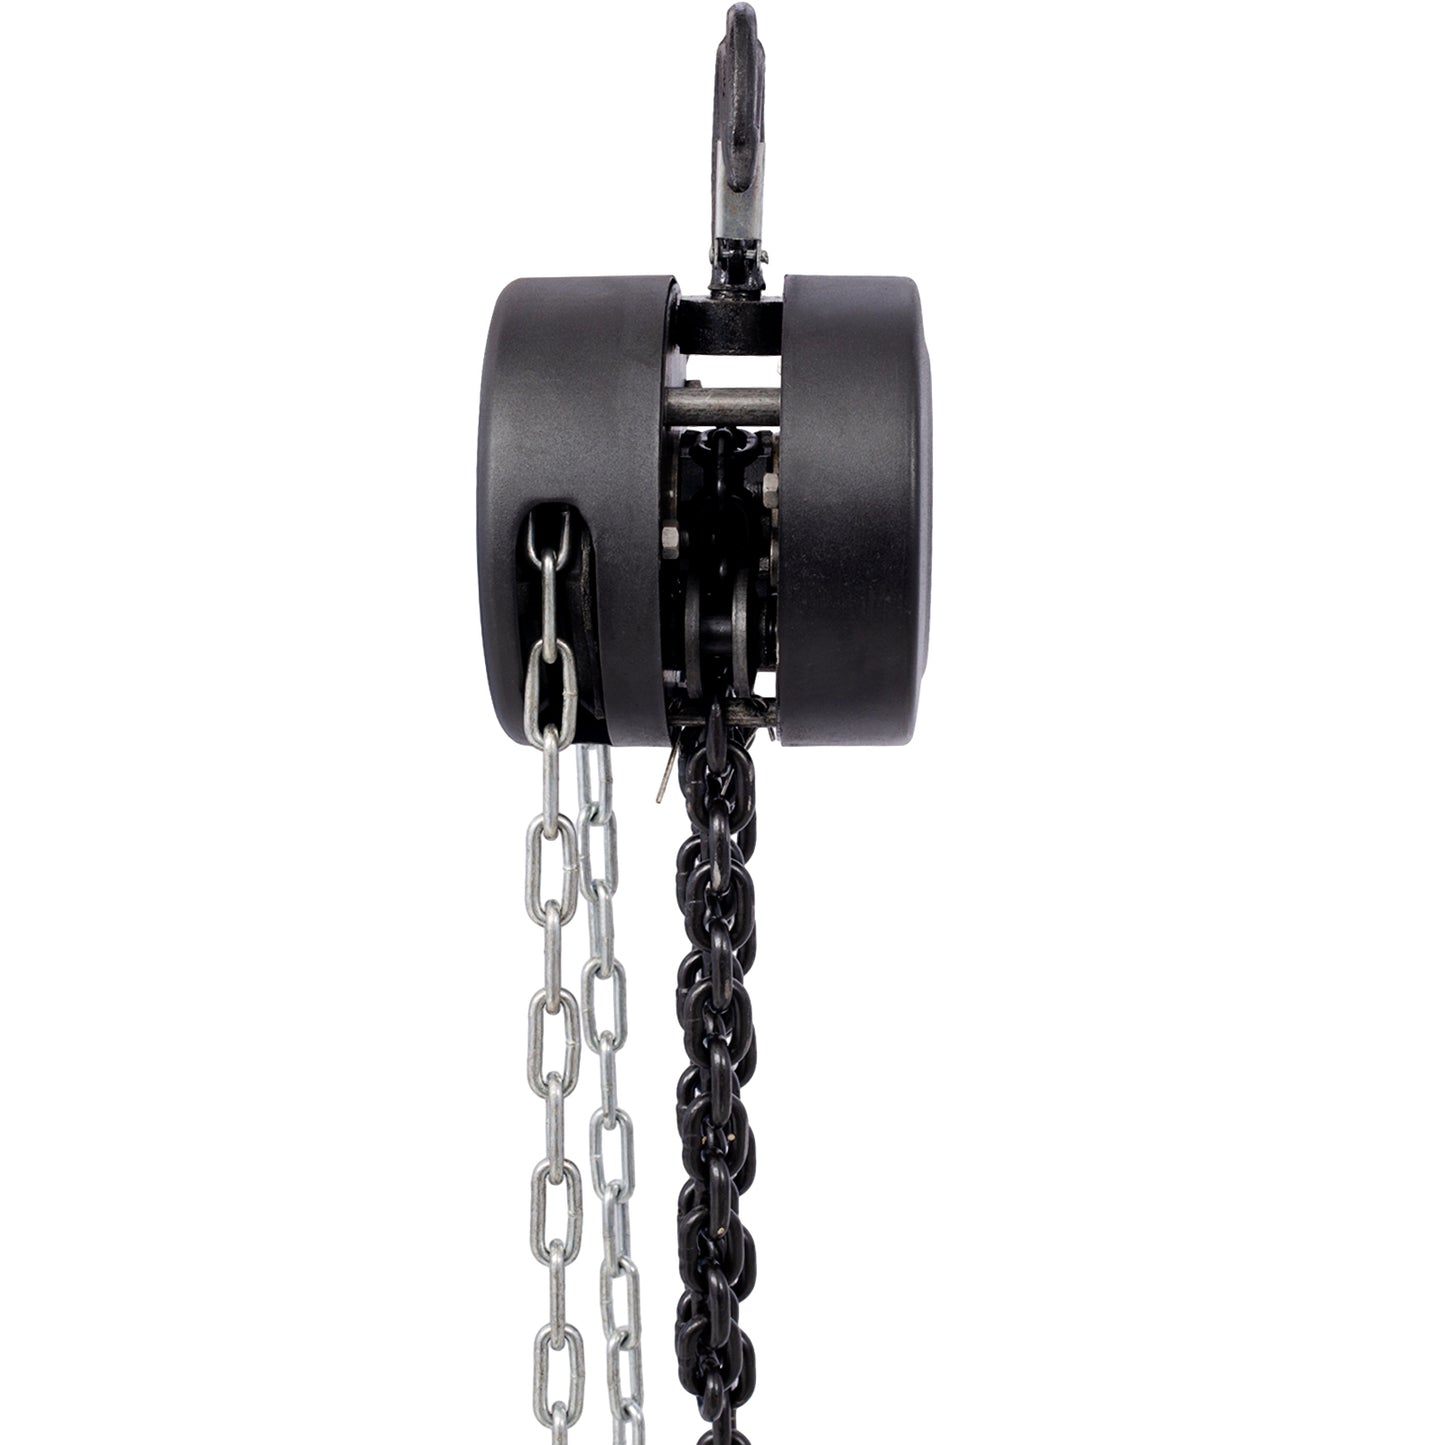 Chain hoist 2200lbs 1T capacity 10ft wIth 2 heavy duty hooks,Manual chain hoist steel construction,black